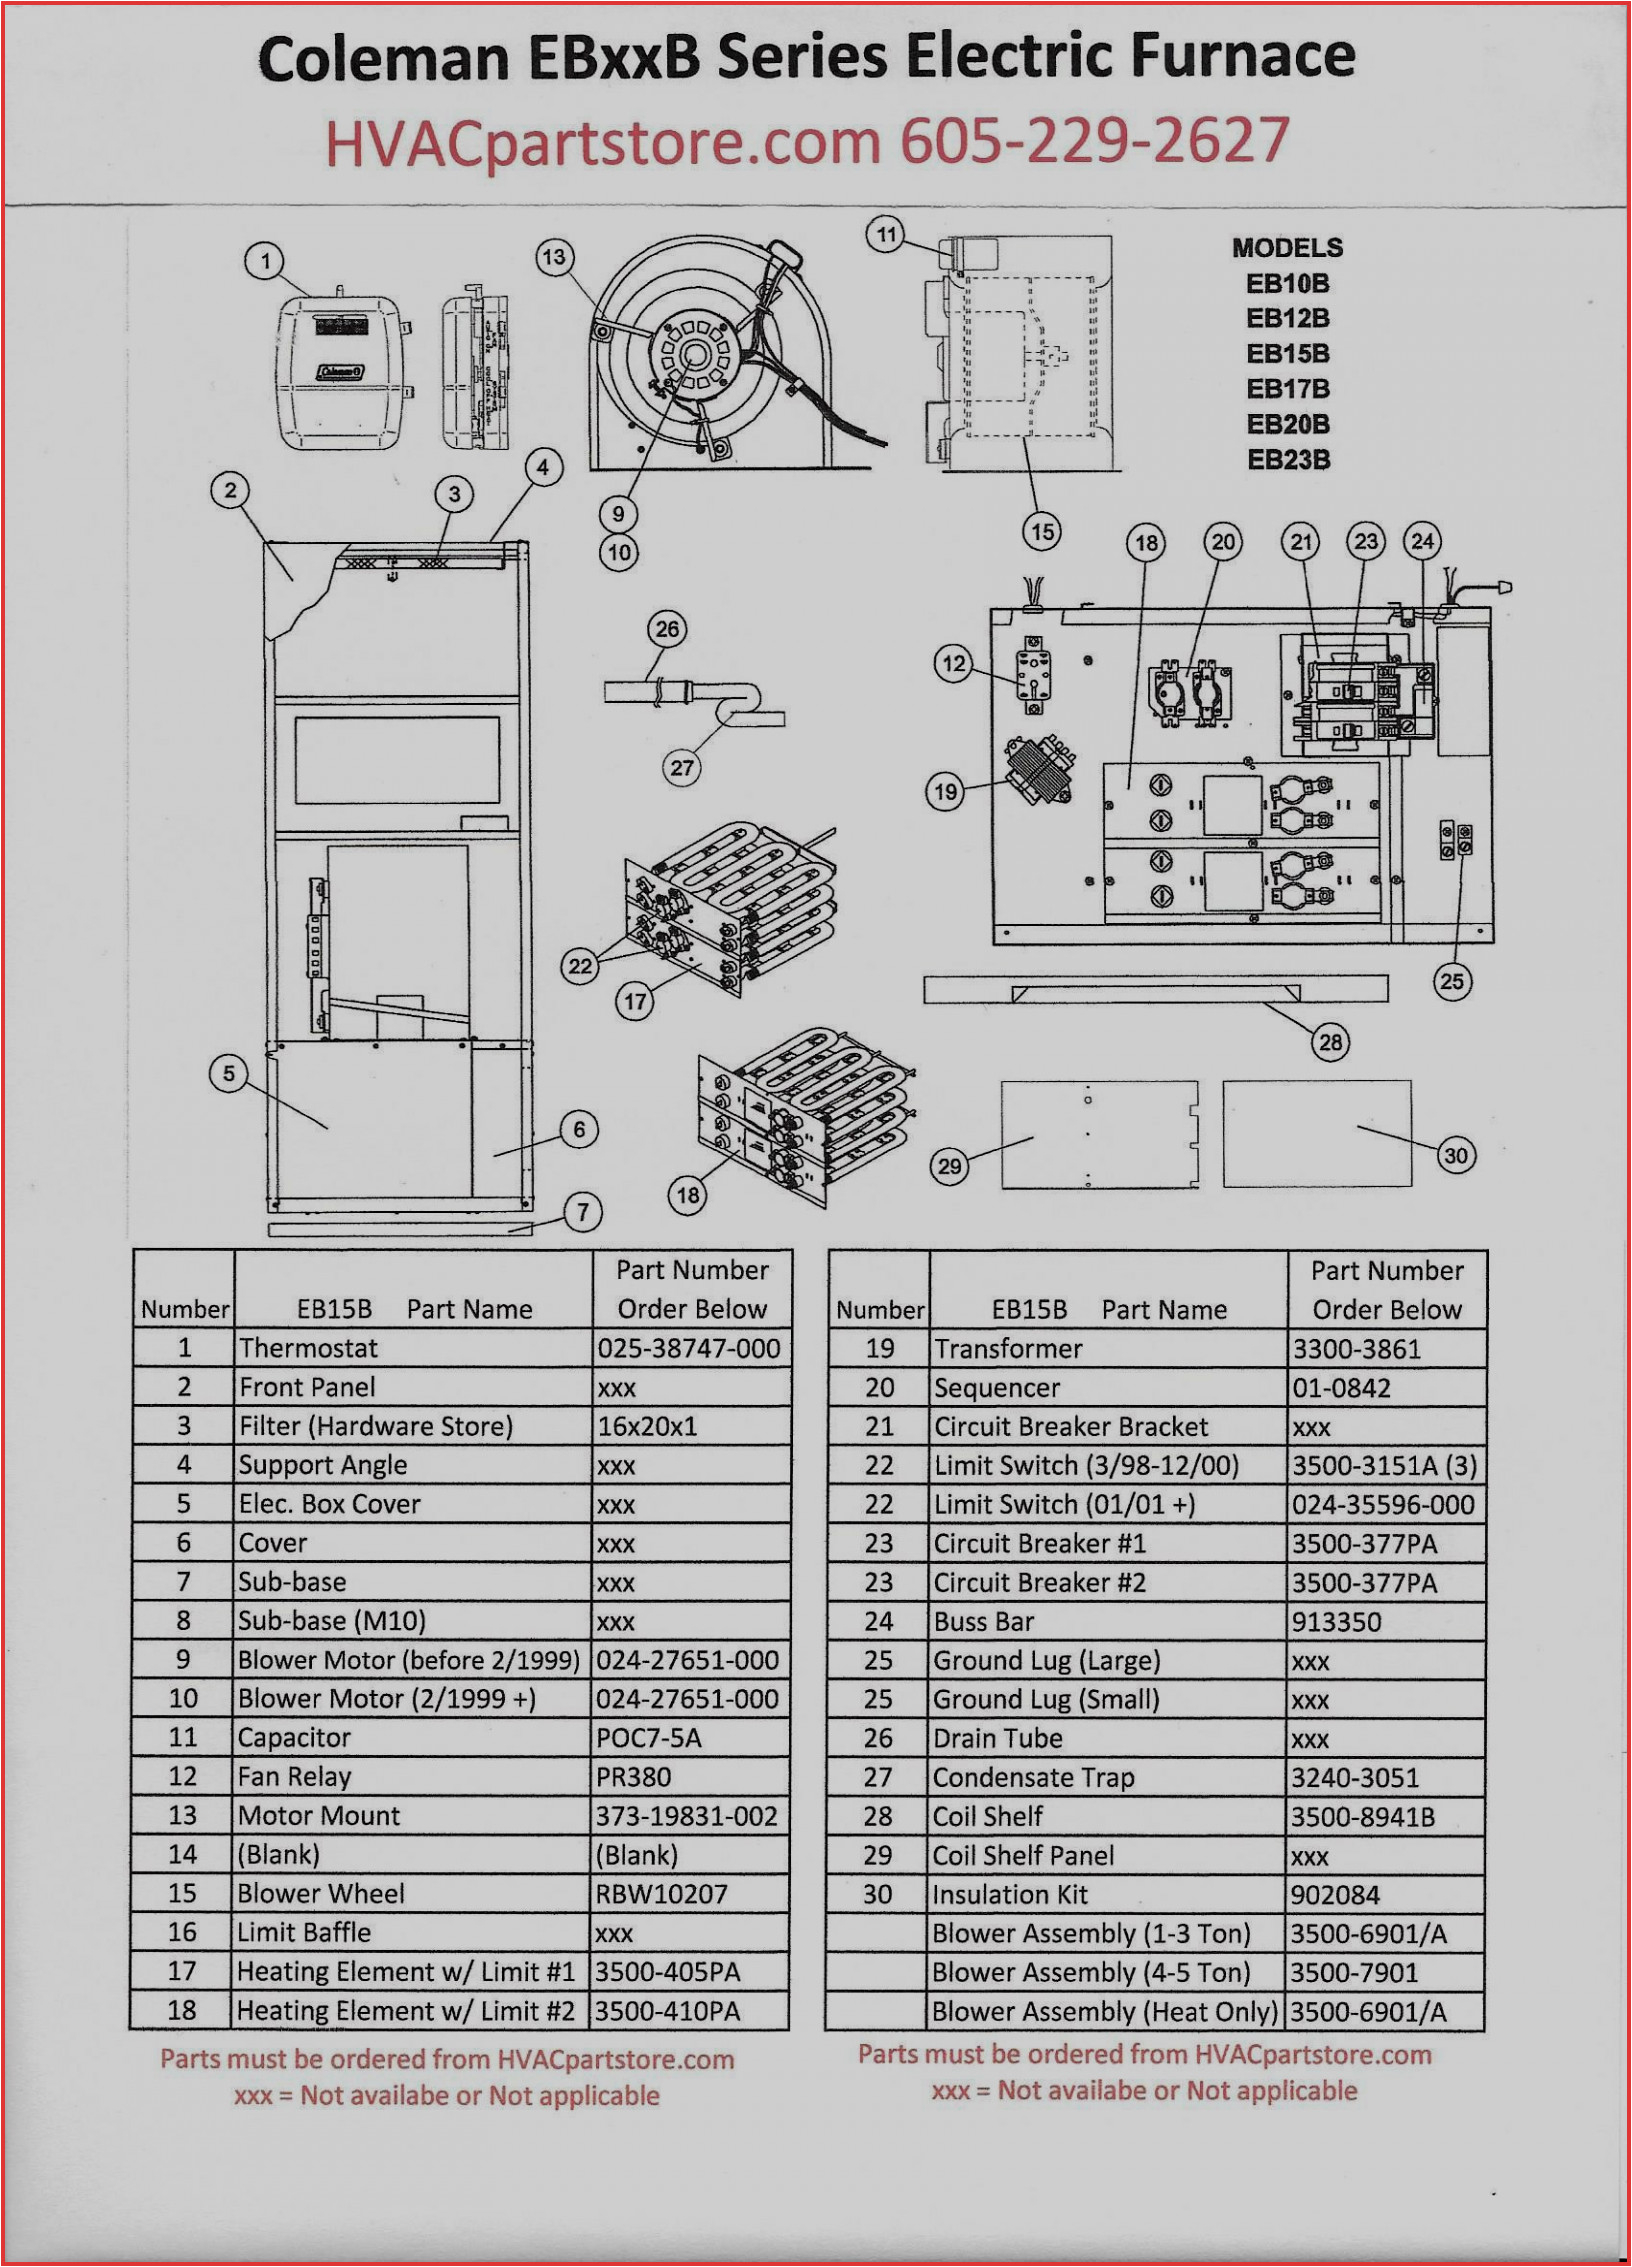 Coleman Electric Furnace Wiring Diagram Janitrol Furnace Wiring Diagram Wiring Diagrams Bib